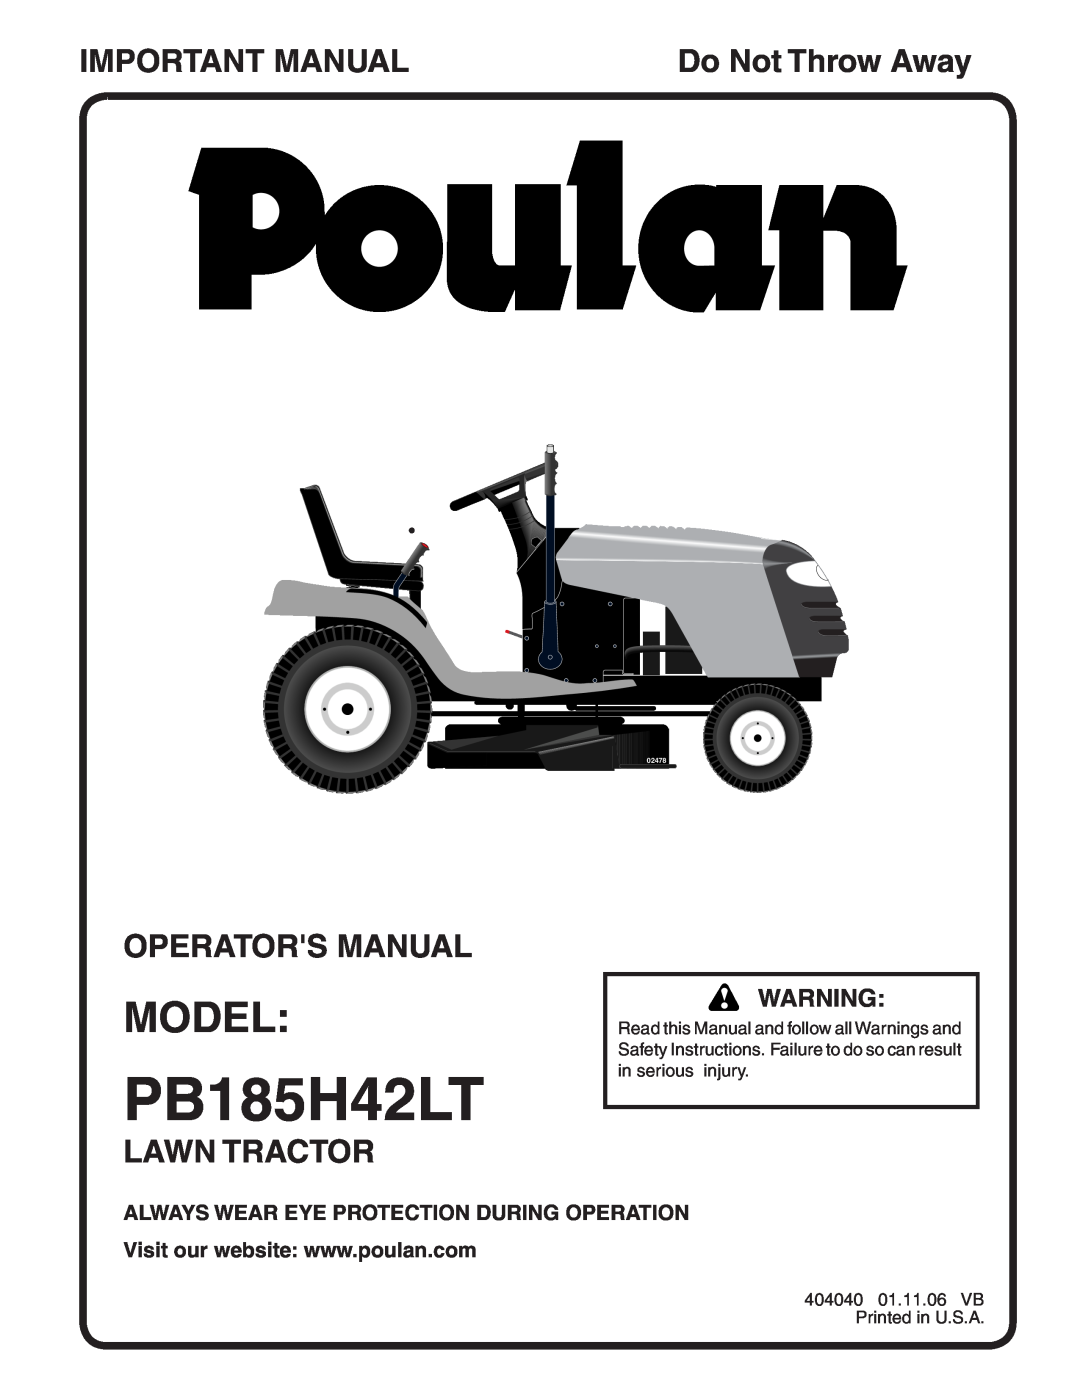 Poulan PB185H42LT manual Model, Important Manual, Operators Manual, Lawn Tractor, Do Not Throw Away, 02478 